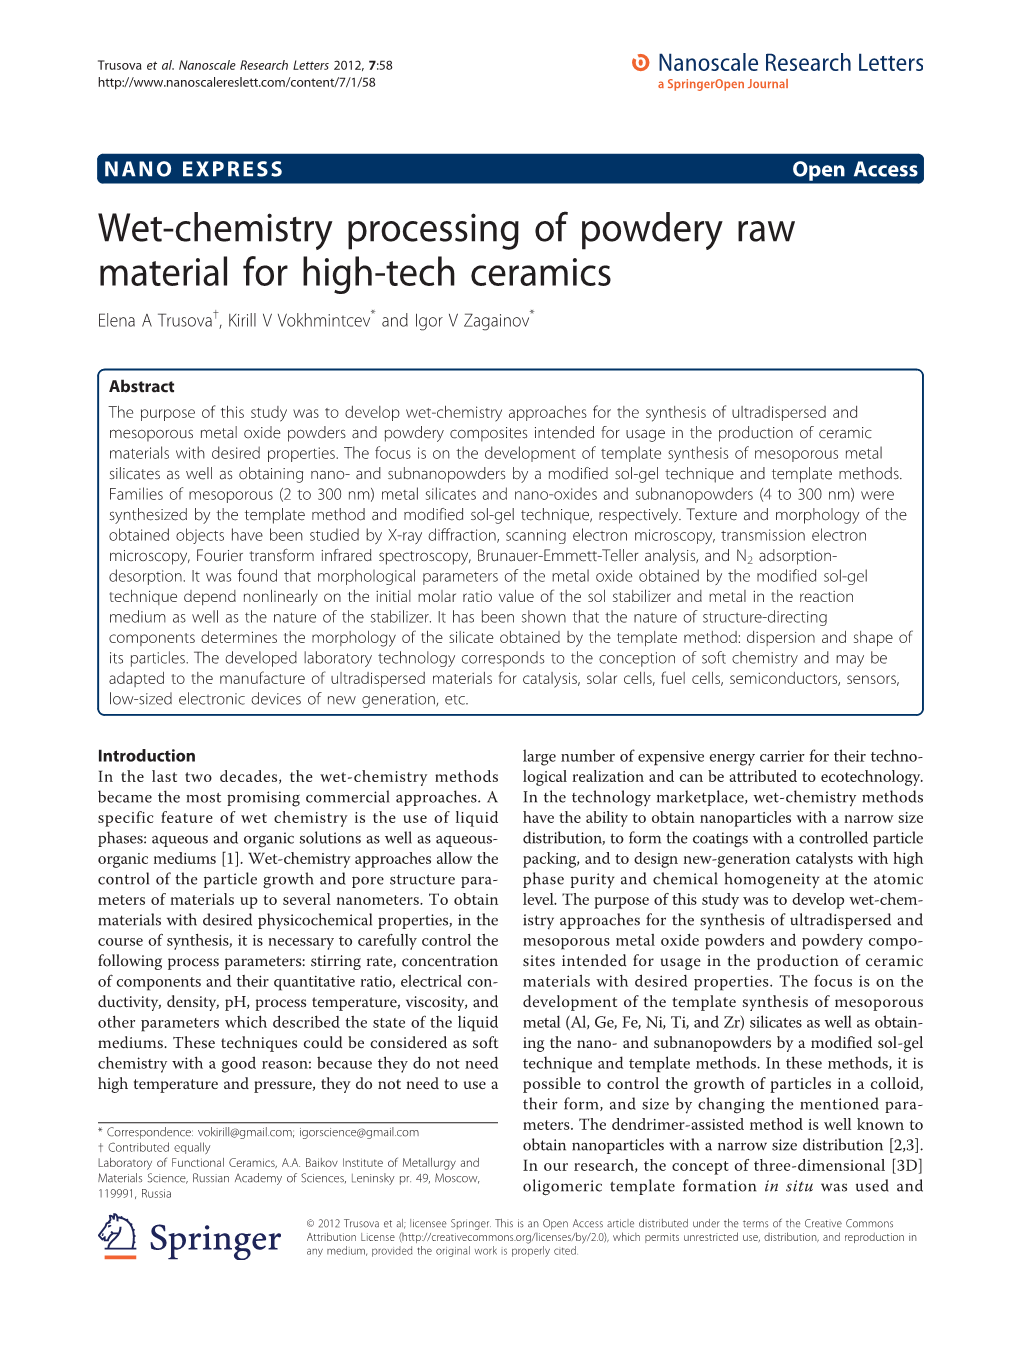 Wet-Chemistry Processing of Powdery Raw Material for High-Tech Ceramics Elena a Trusova†, Kirill V Vokhmintcev* and Igor V Zagainov*